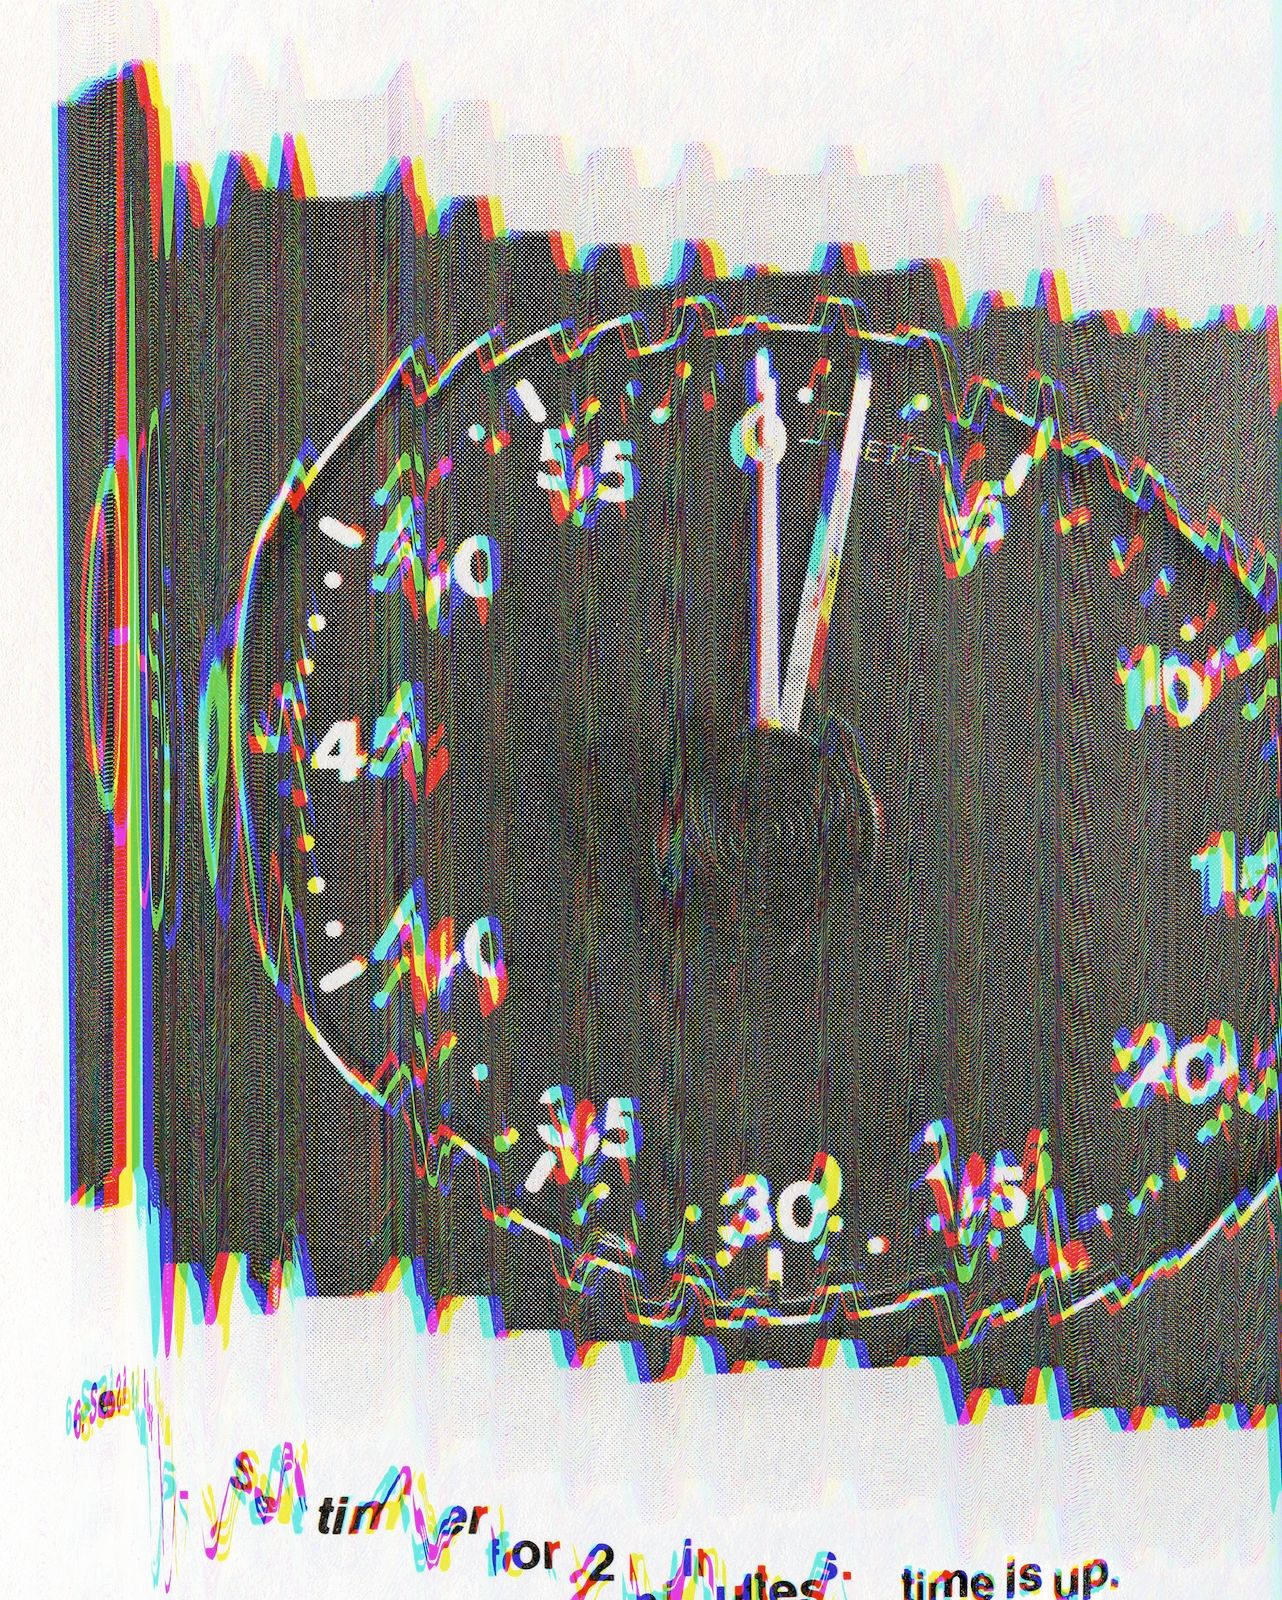 Sara Cwynar, Time Is Up (Darkroon Manuals), 2013, chromogenic print mounted on plexiglas, framed, 30 × 24 in.